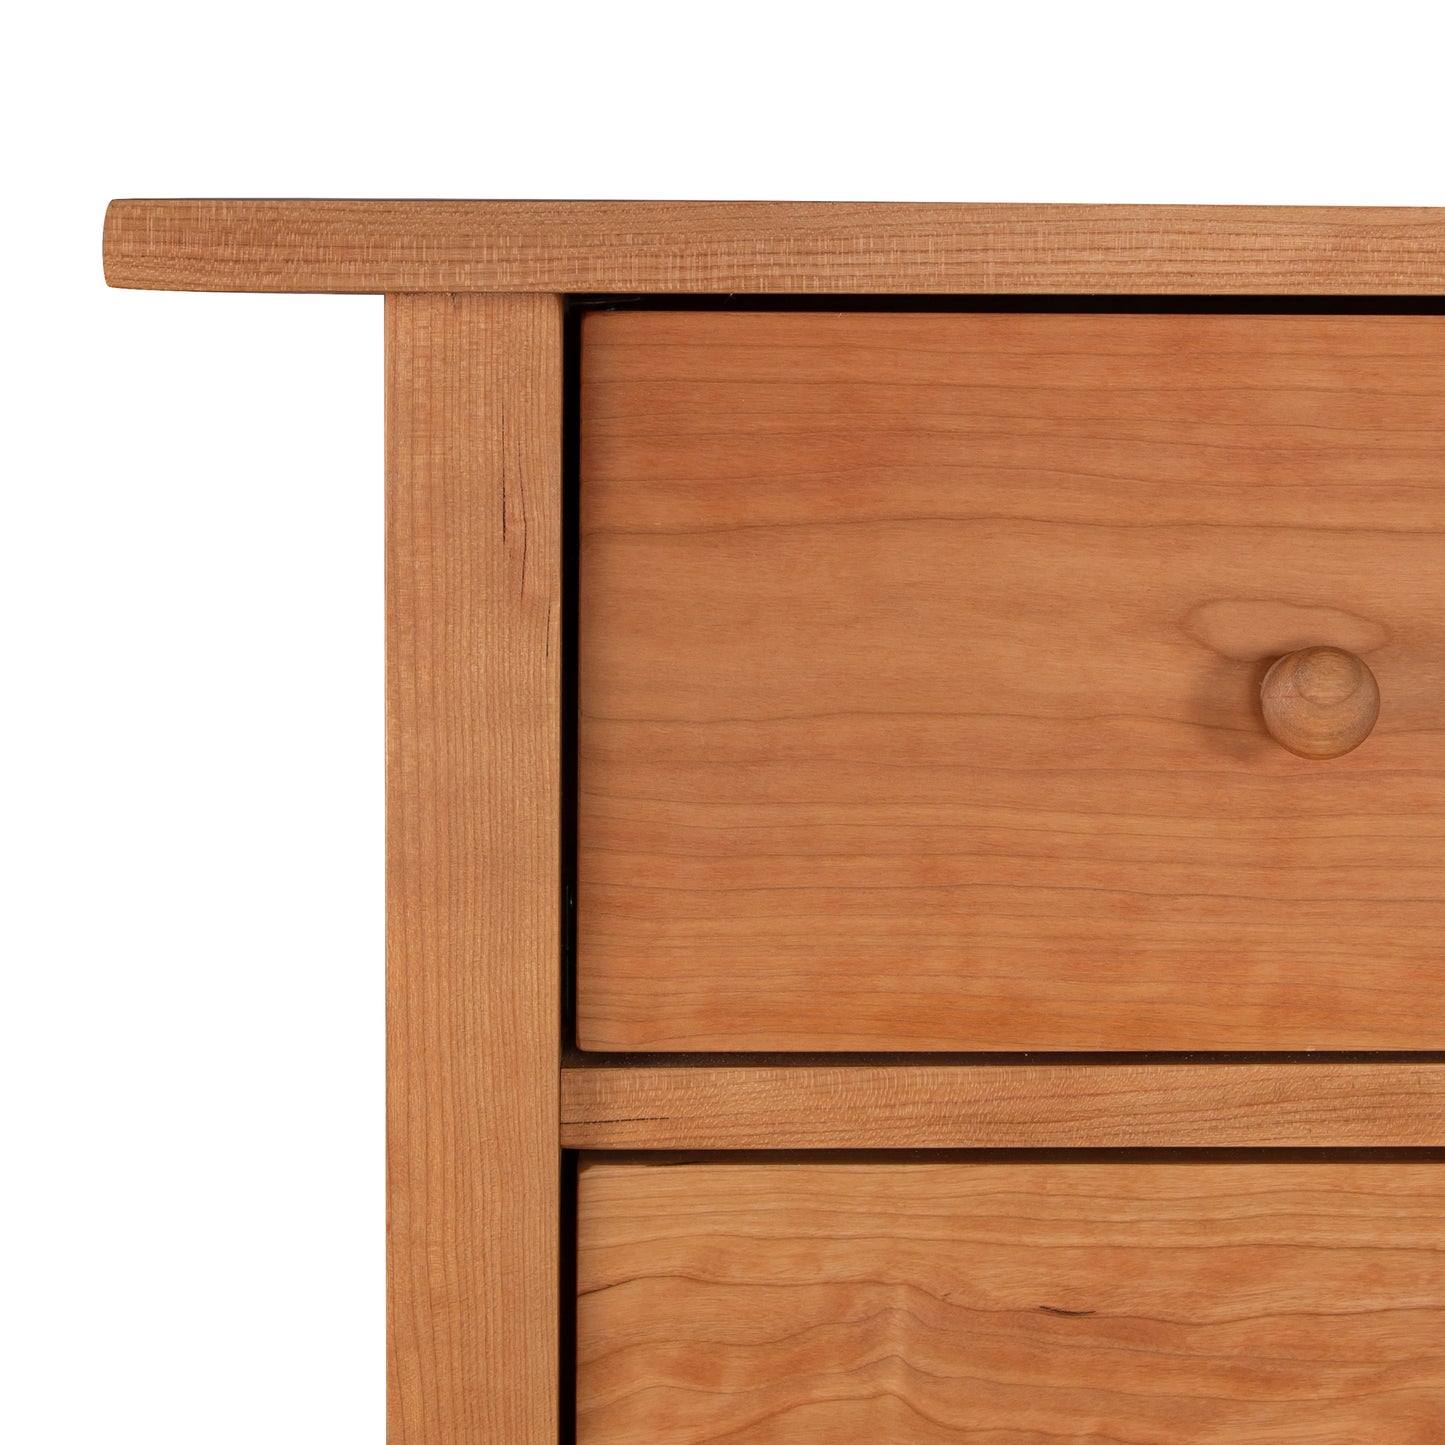 A close up of a Vermont Furniture Designs Burlington Shaker 8-Drawer Dresser #1 in Vermont.